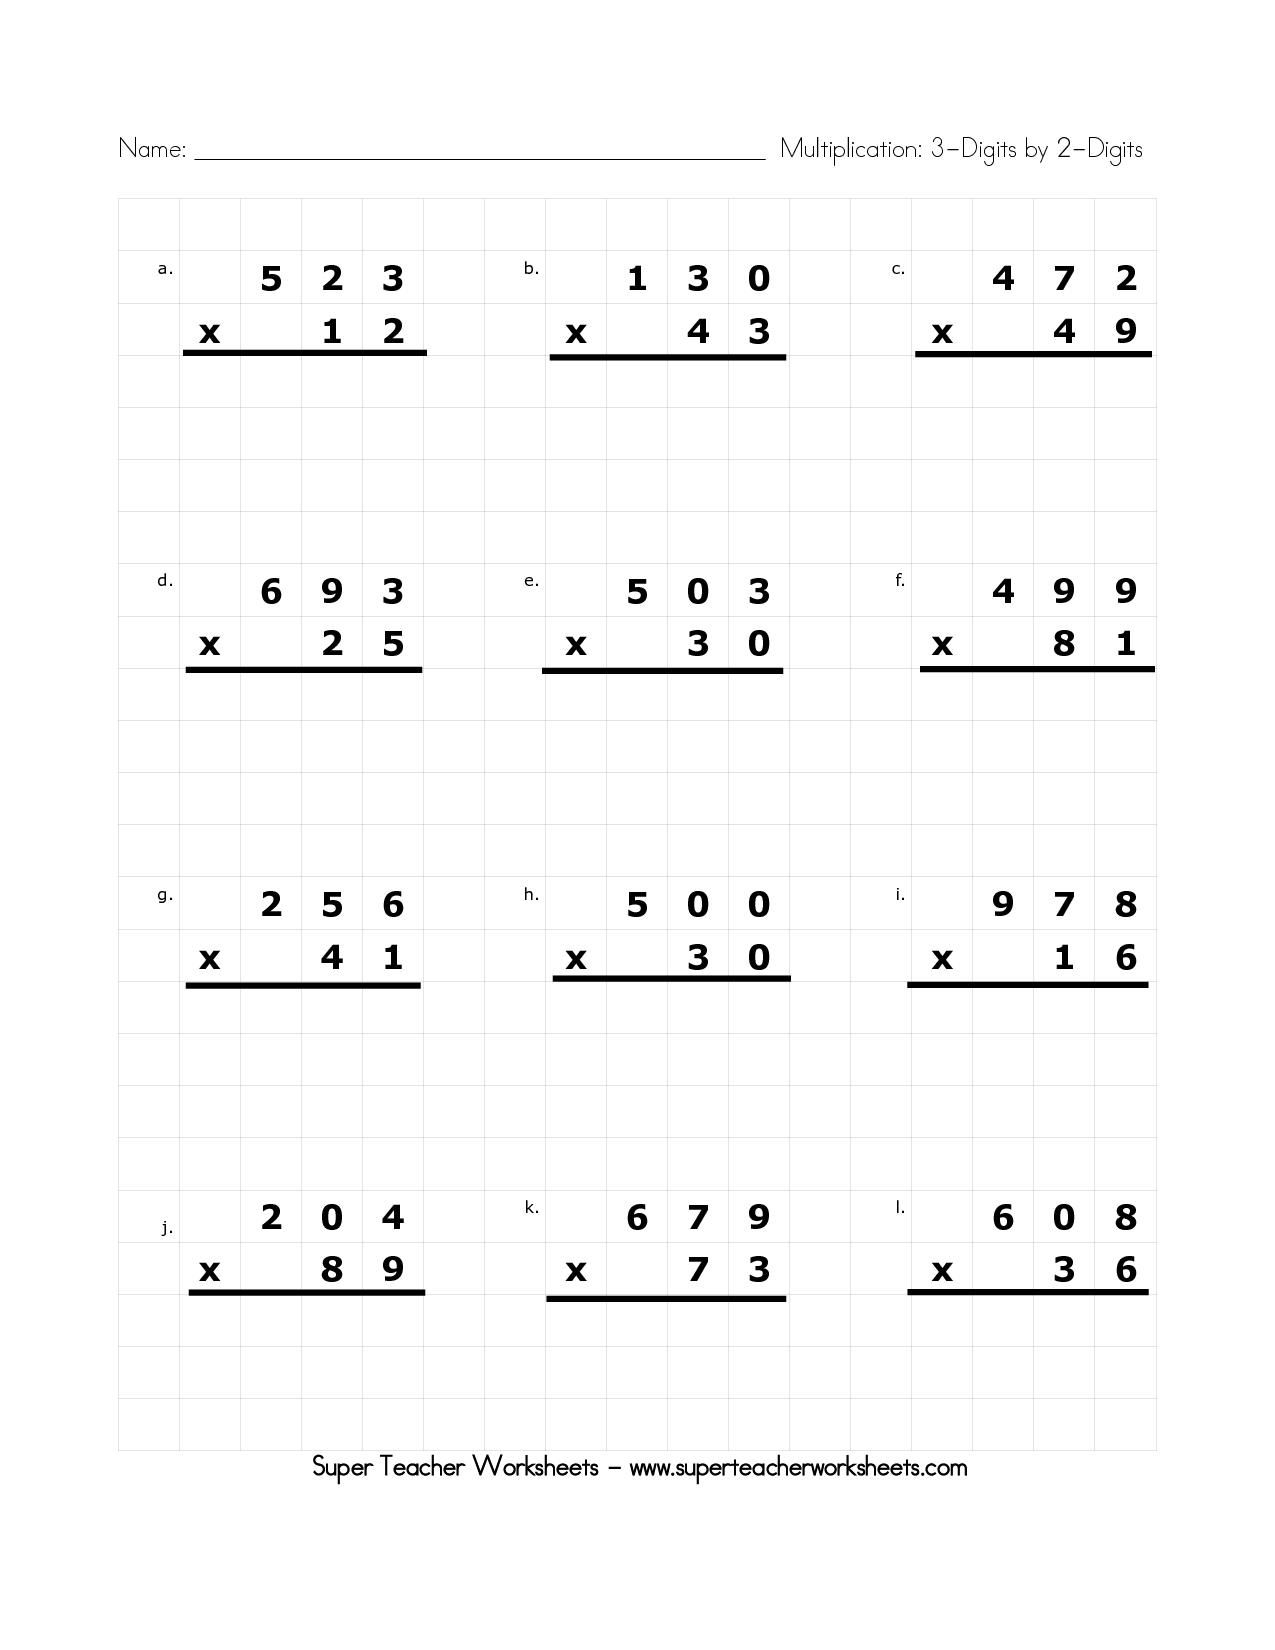 Super Teacher Worksheets Multiplication Table | Super